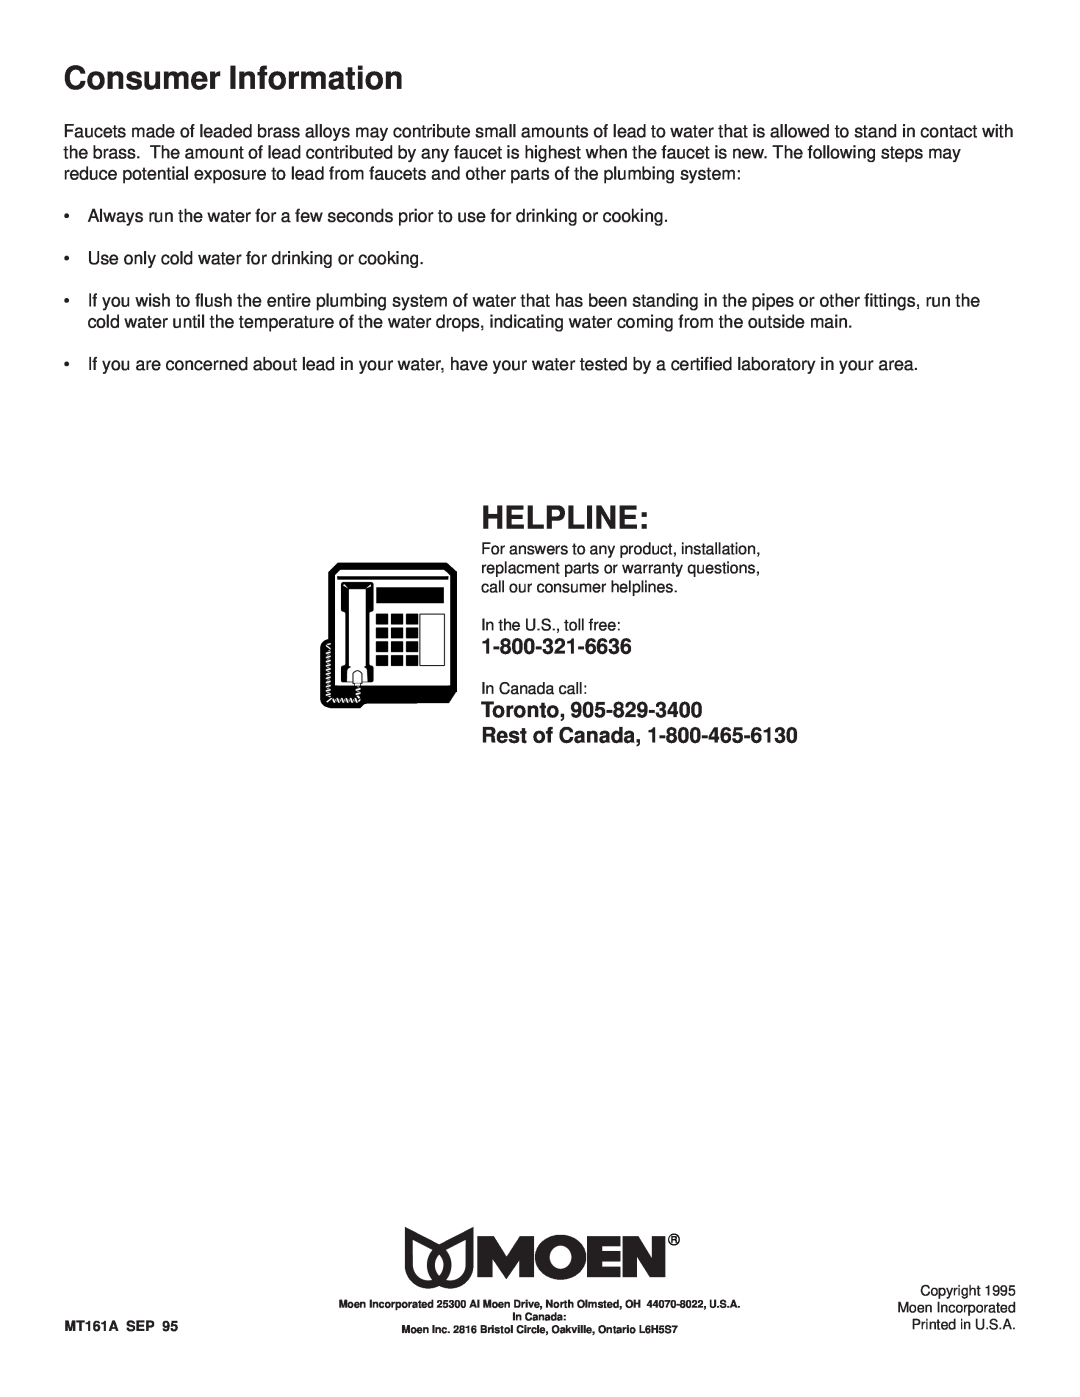 Moen 4901, 8901 installation instructions Consumer Information, Helpline, Toronto Rest of Canada 